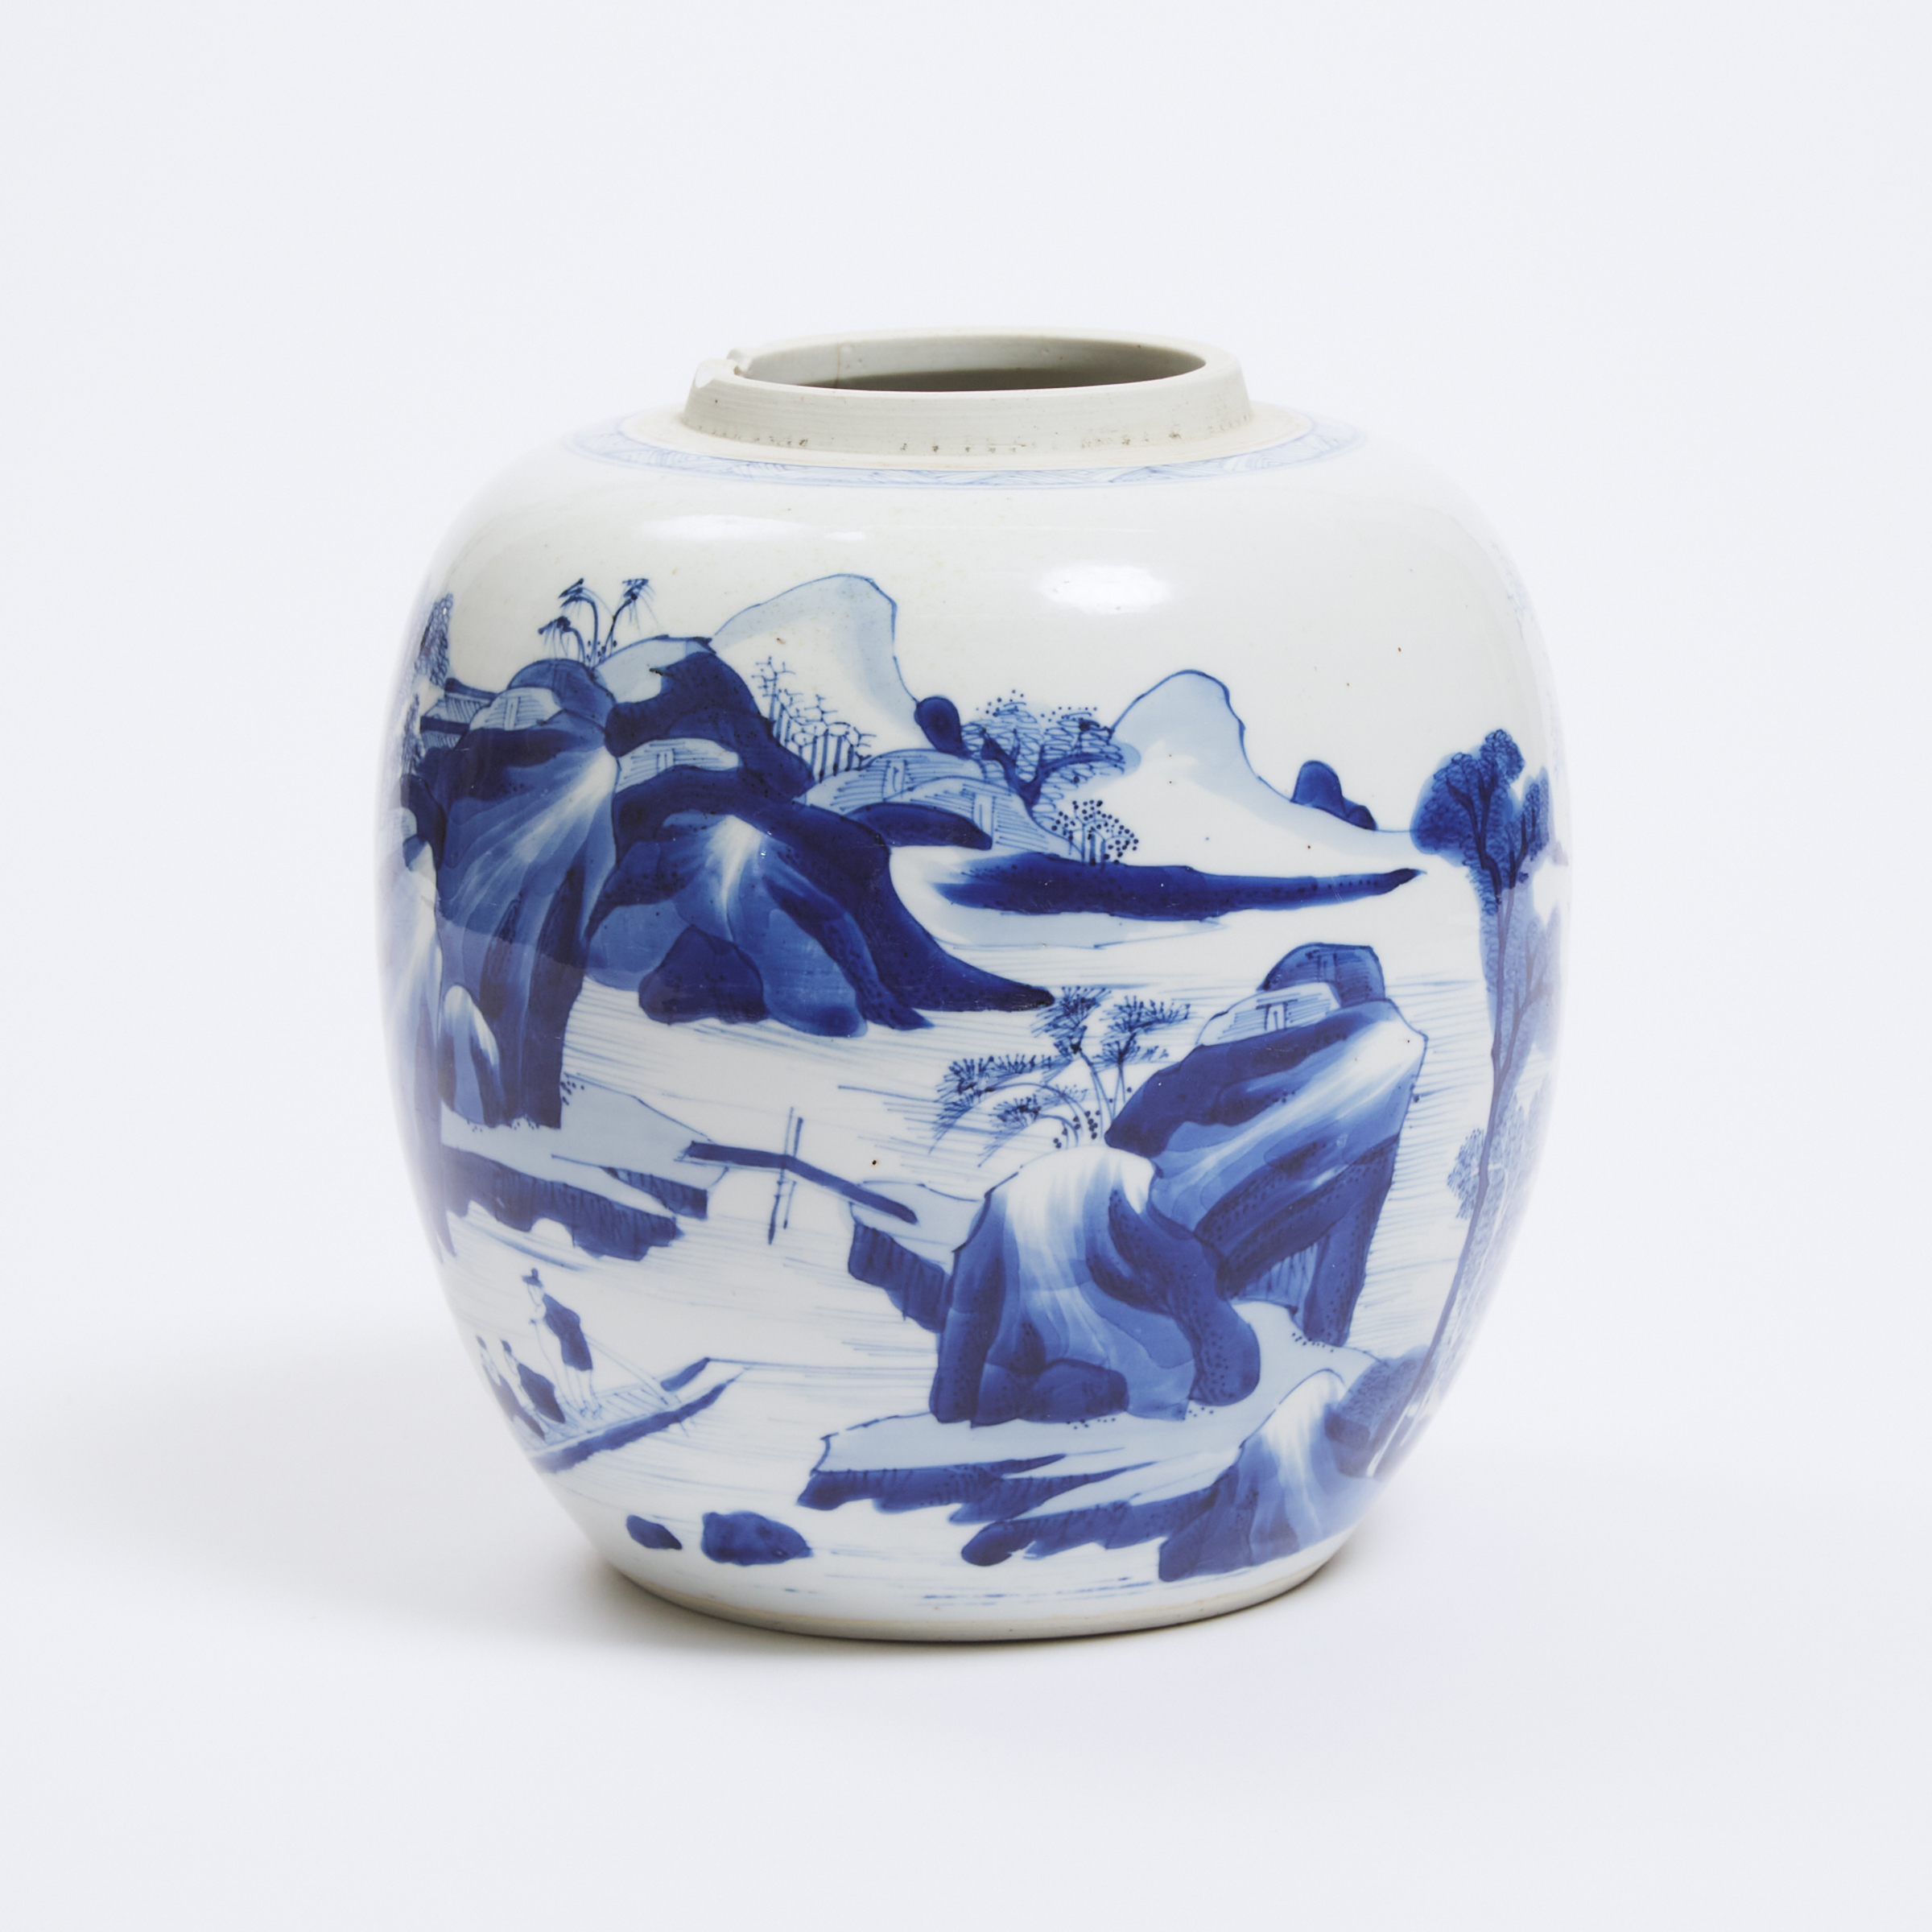 A Large Blue and White Ginger Jar, Kangxi Period (1662-1722)